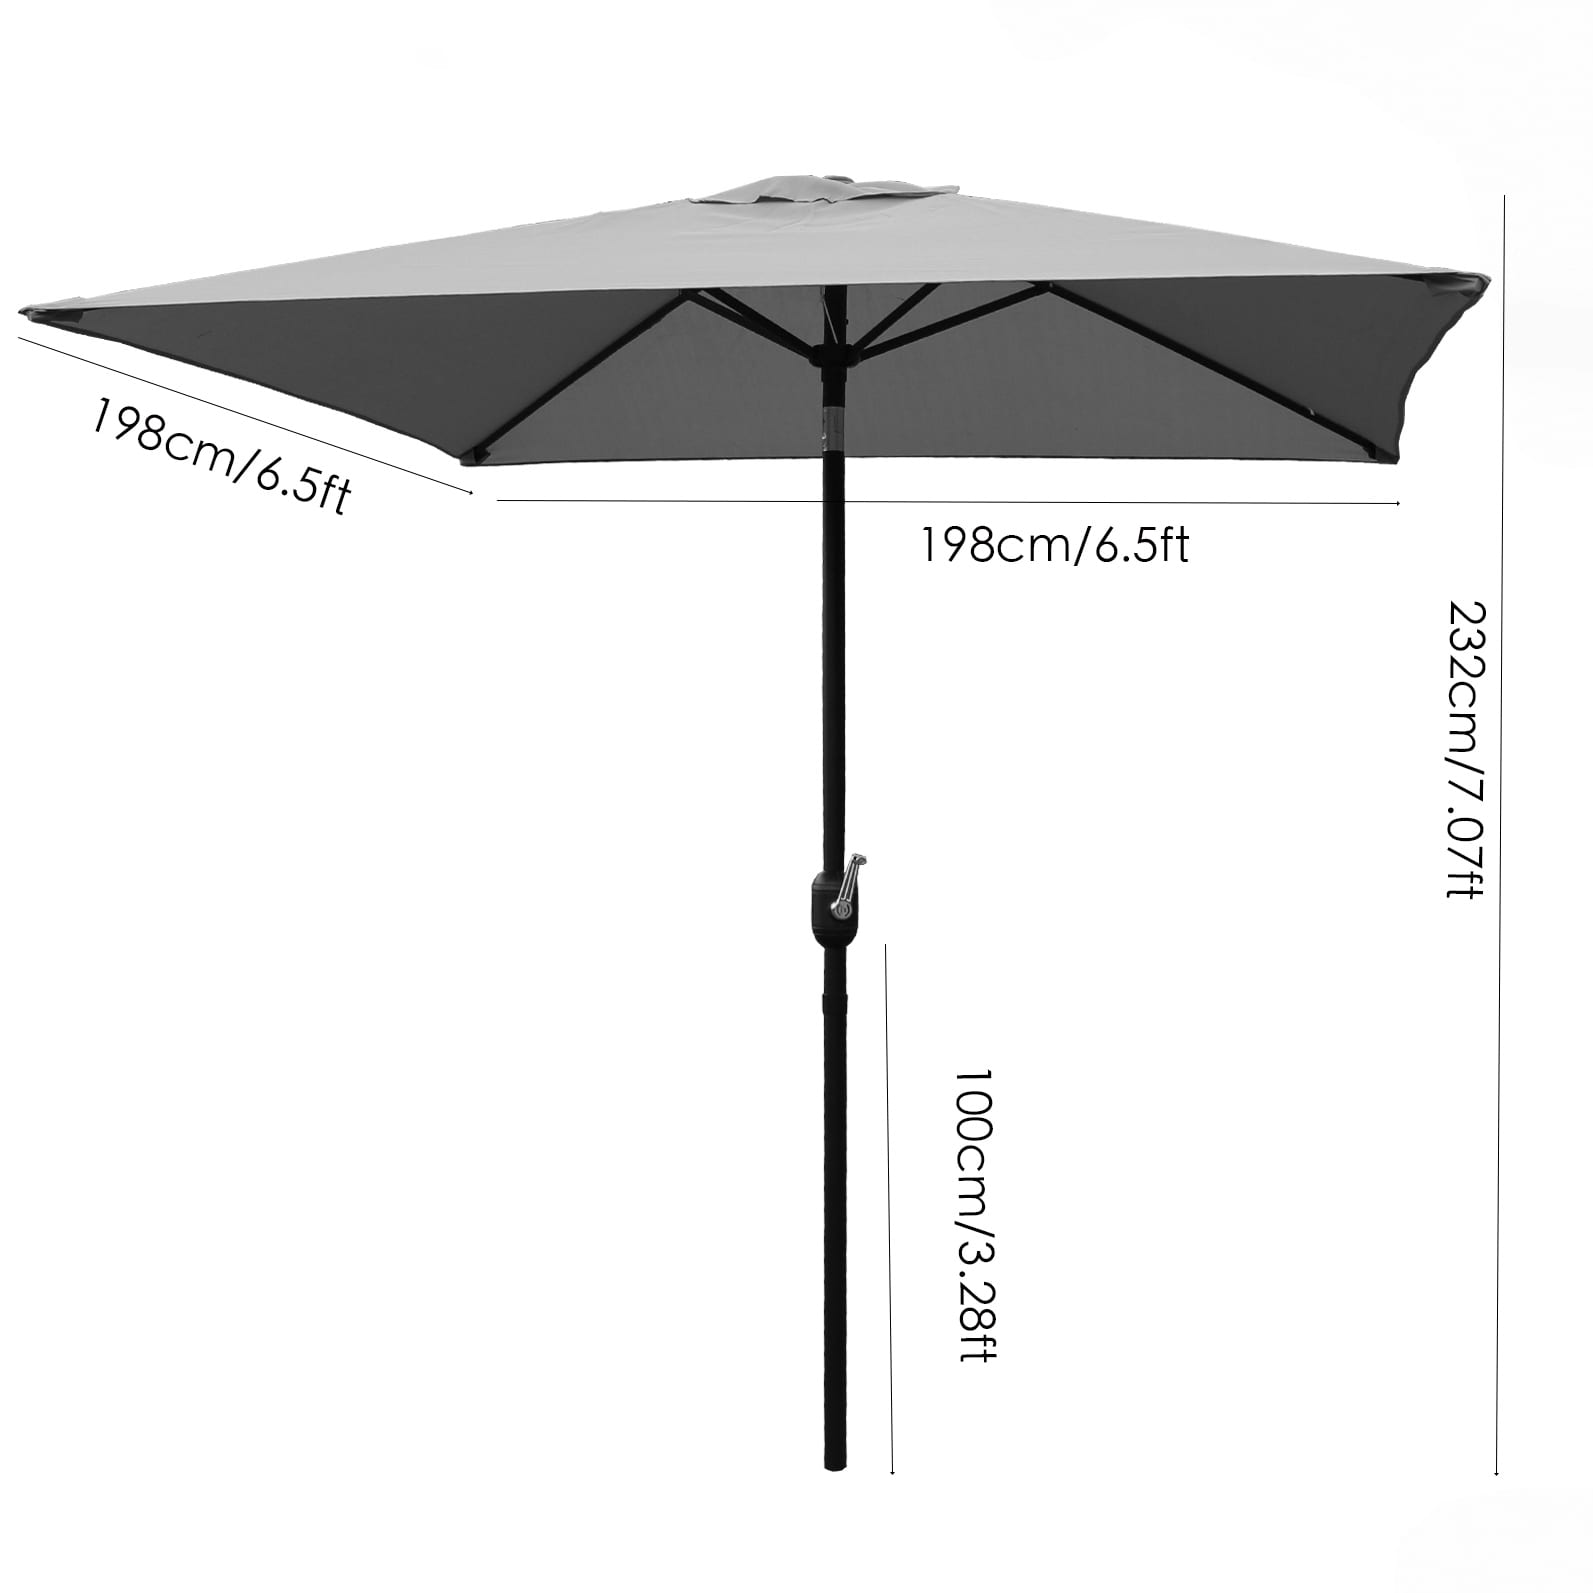 Davee 6.5 Ft Square Green Market Umbrella and Patio Umbrella with Tilt and Crank